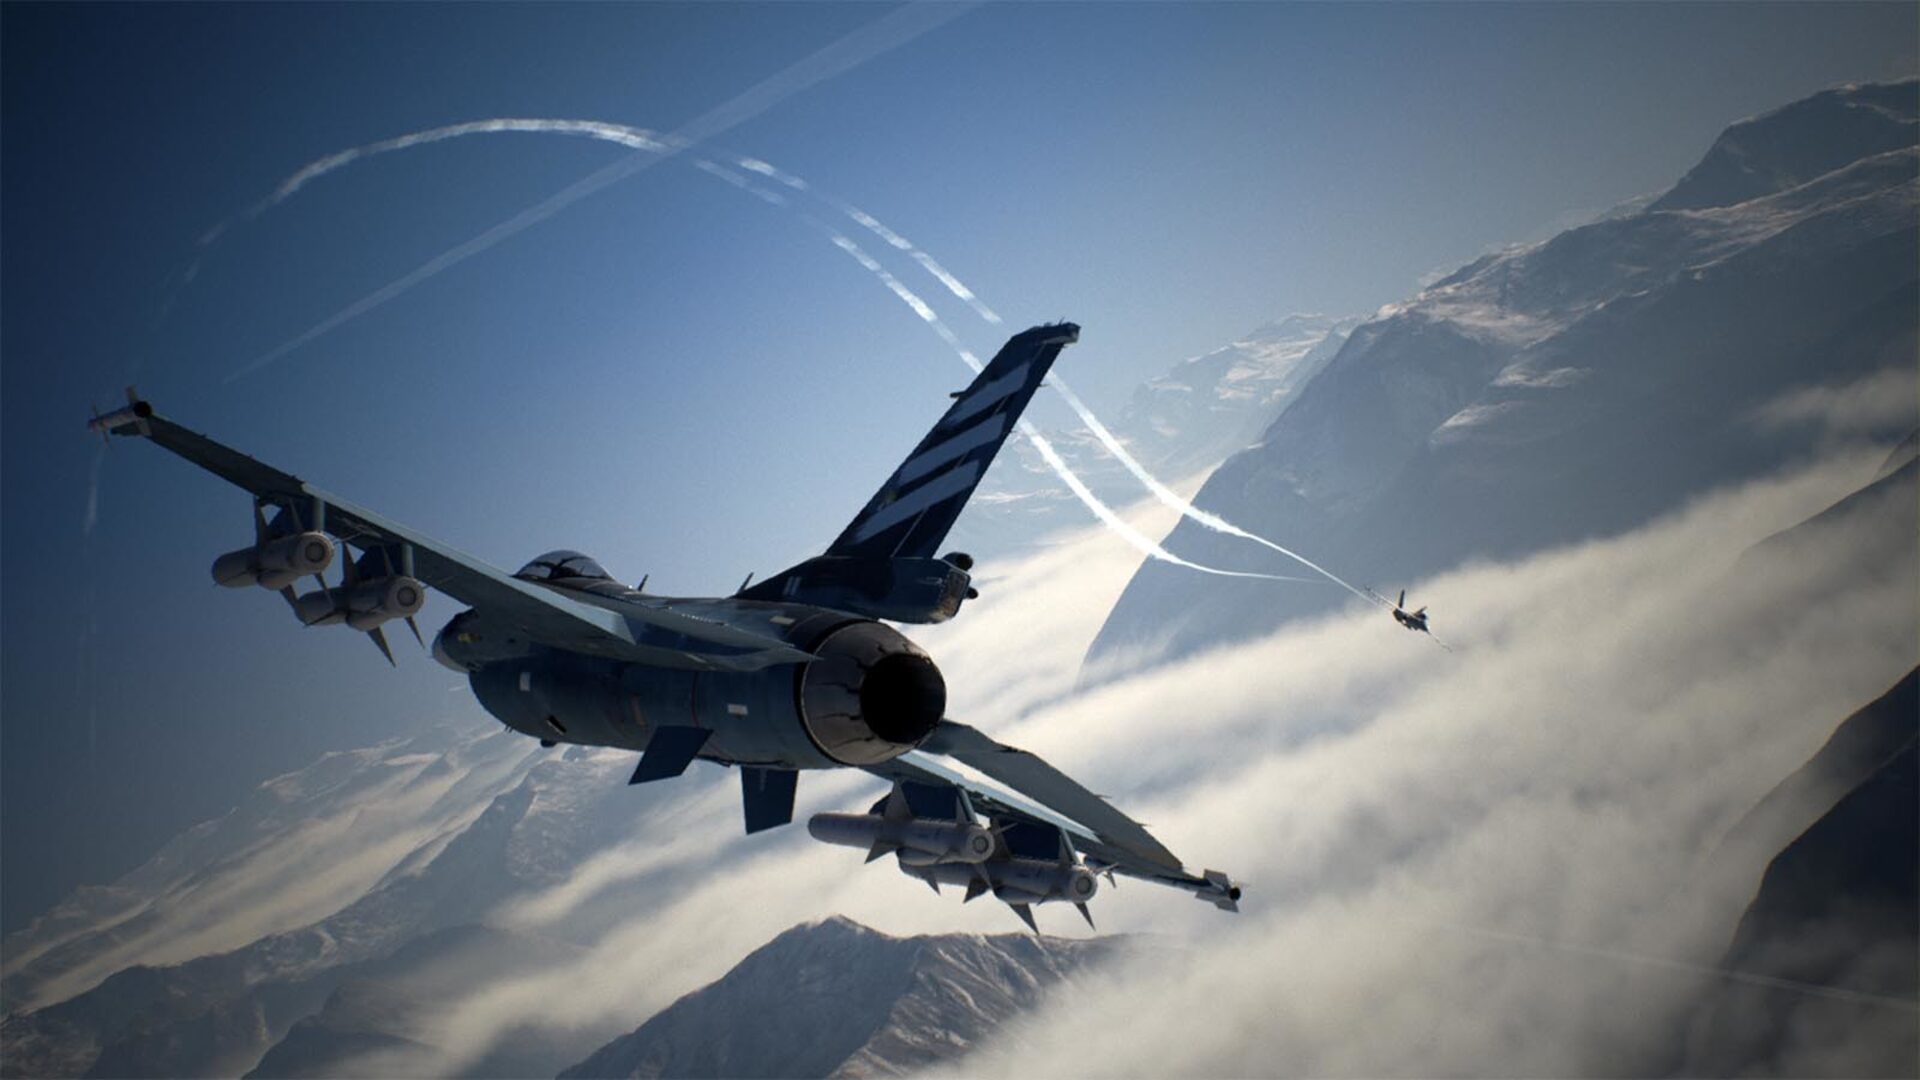 Comprar Ace Combat 7: Skies Unknown - TOP GUN: Maverick Edition Steam